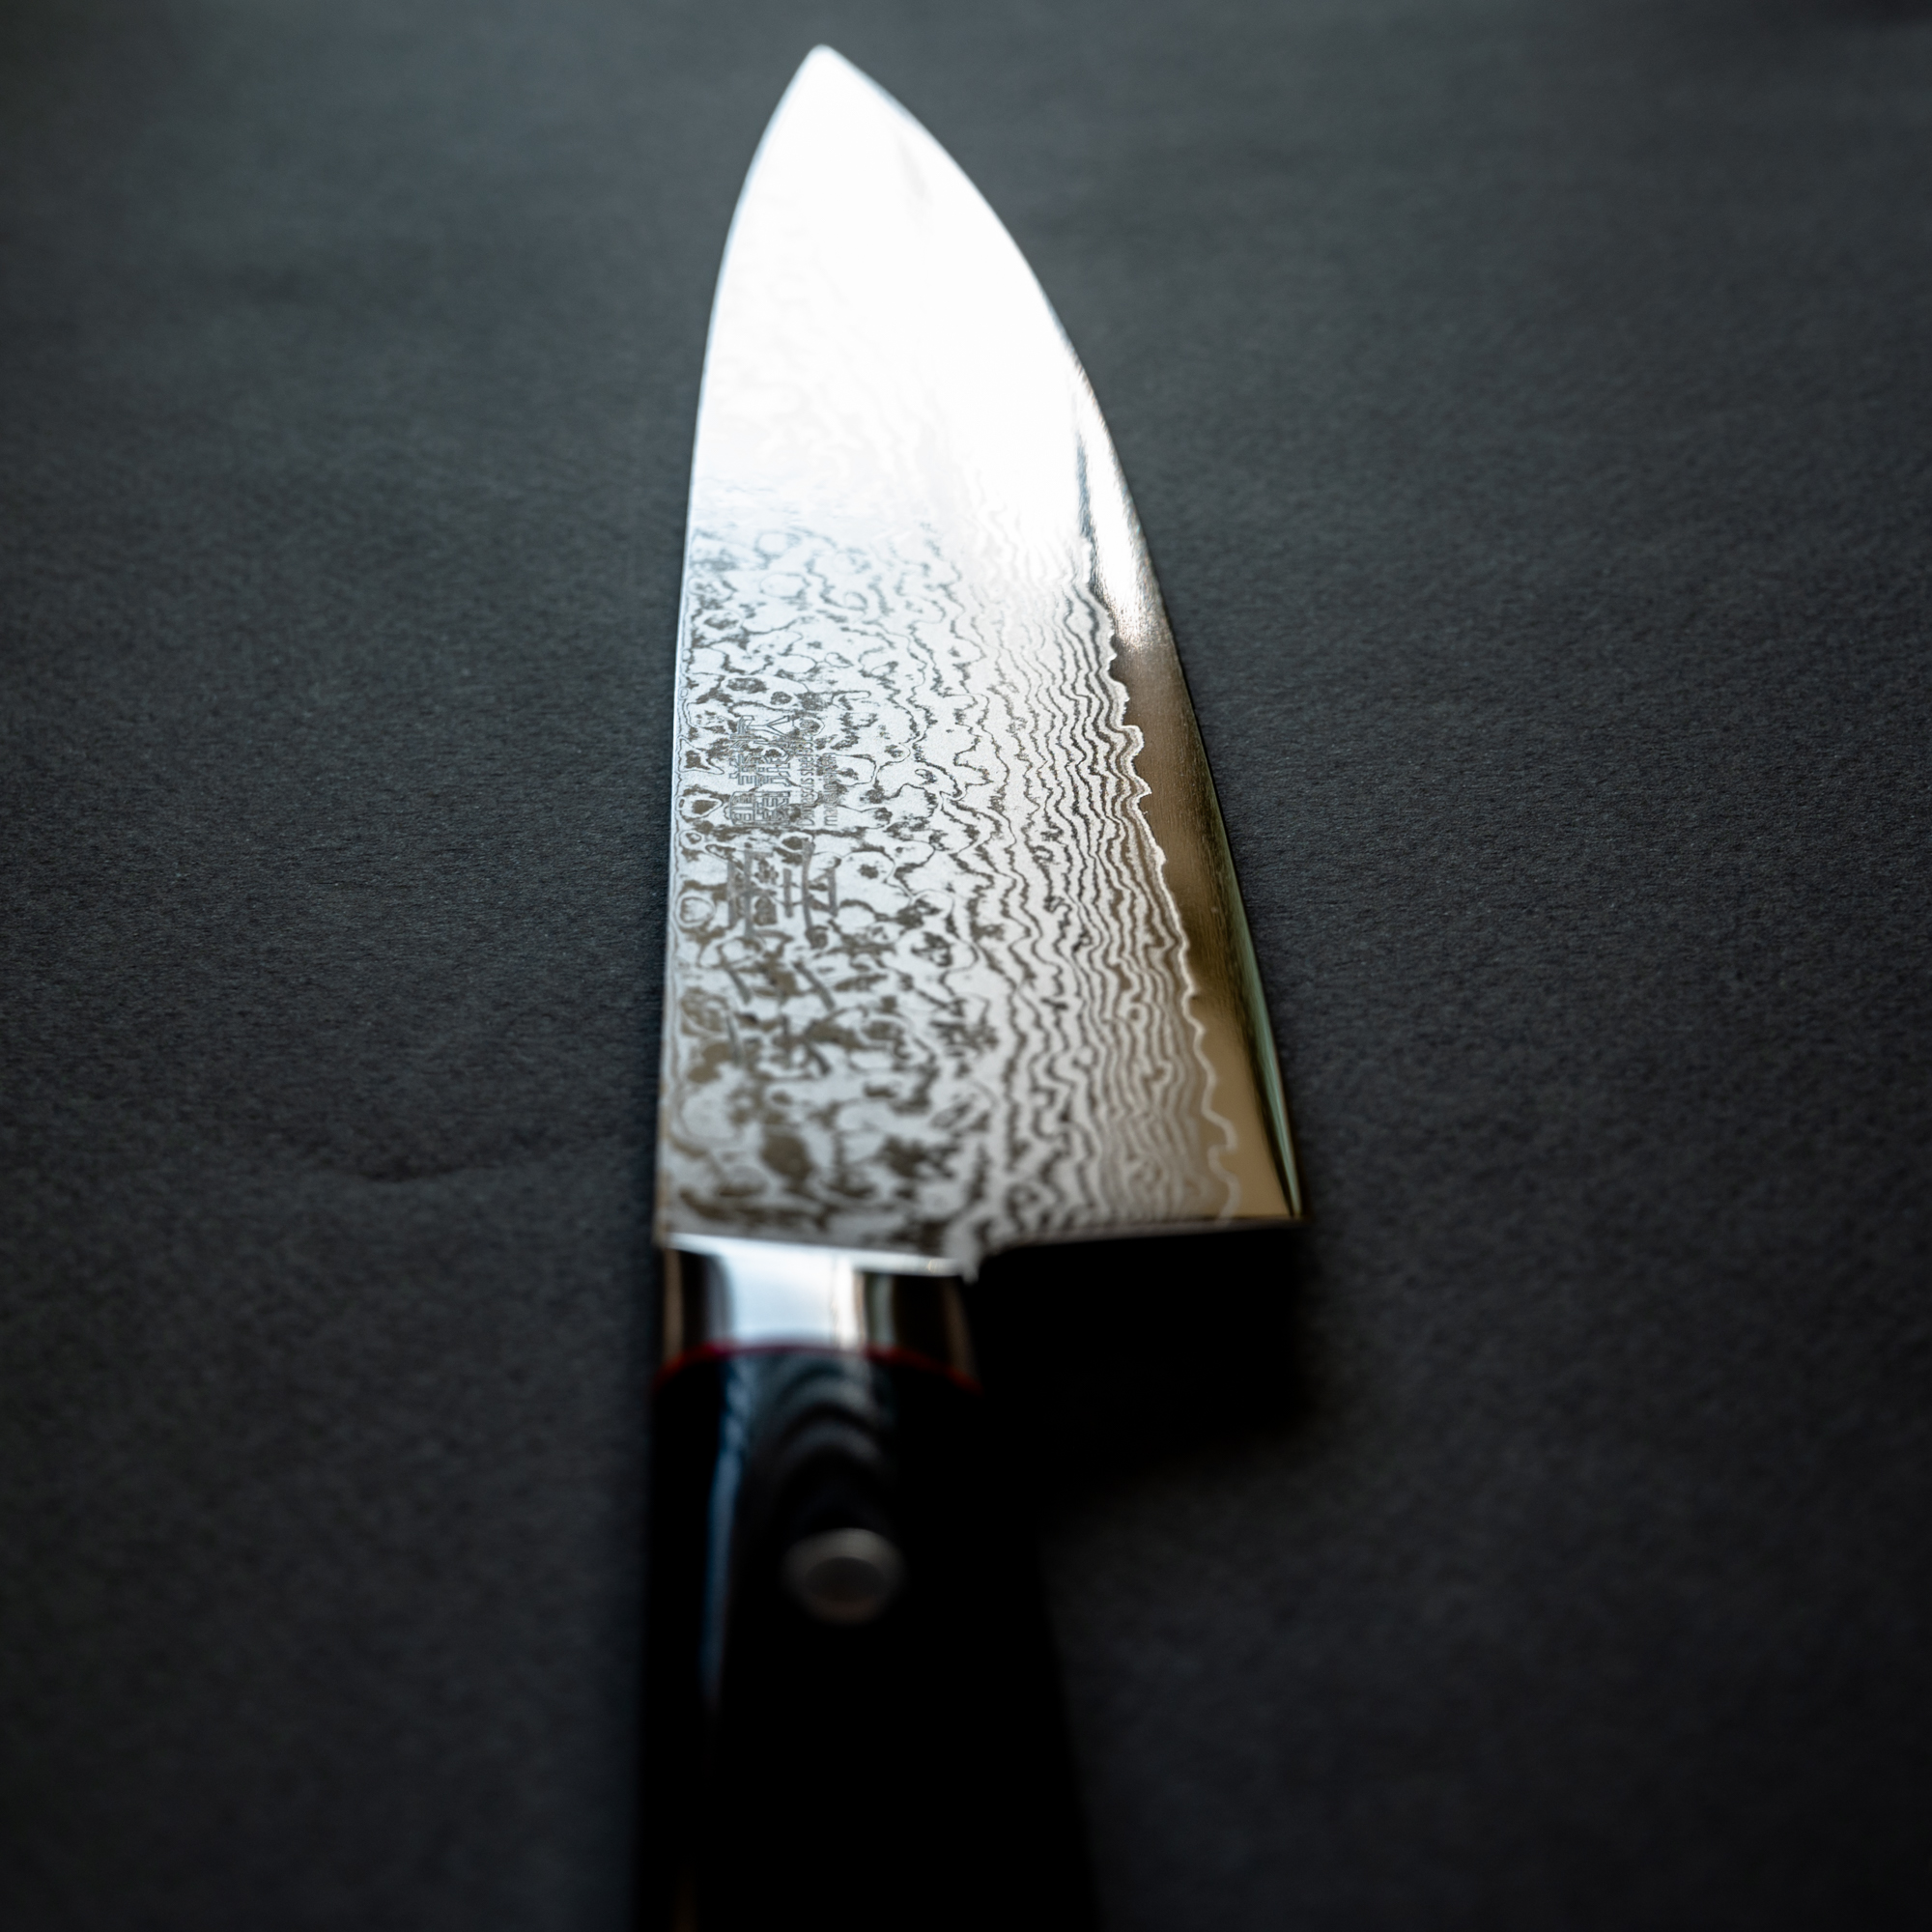 Cuchillo Japonés Gyuto / Chef Damasco Saiun 200mm - Te lo Afilo